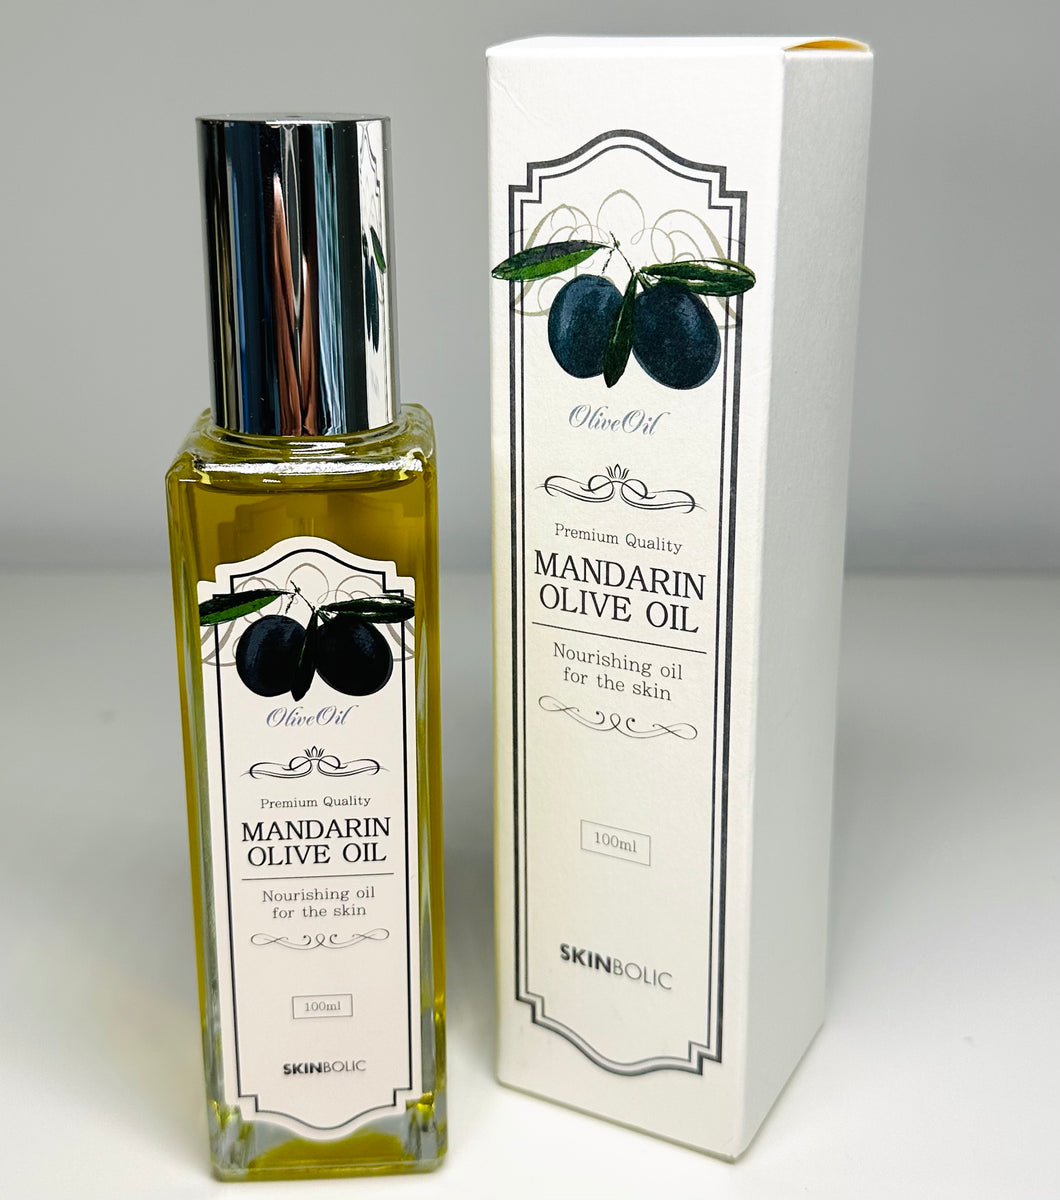 Skinbolic Mandarin Olive Oil 100ml